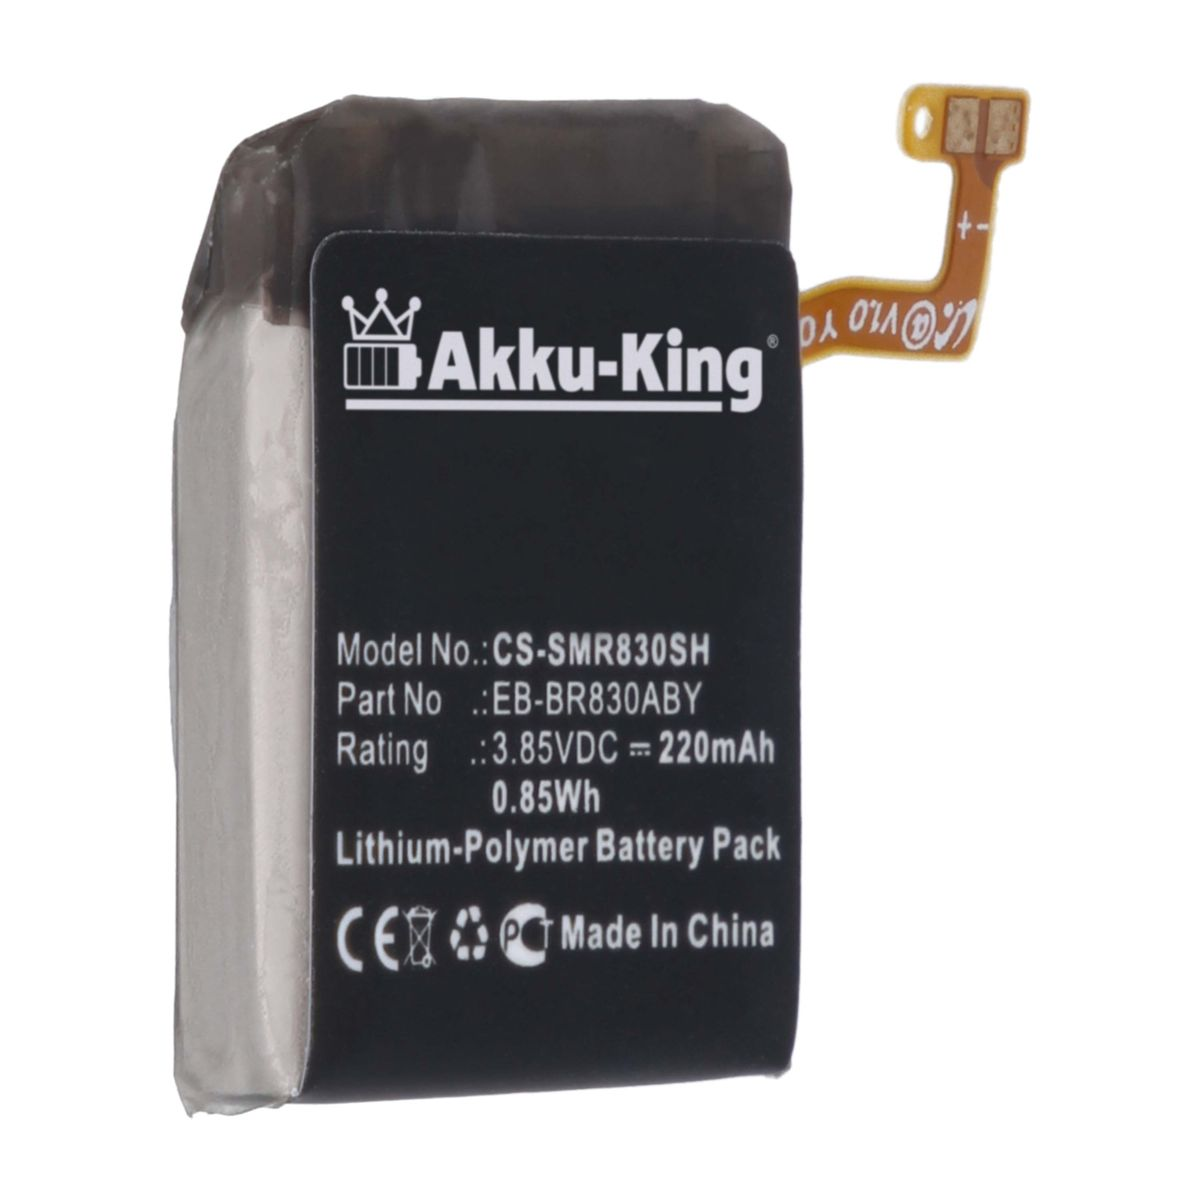 Smartwatch-Akku, Akku Volt, kompatibel EB-BR830ABY AKKU-KING Samsung 3.85 220mAh Li-Polymer mit